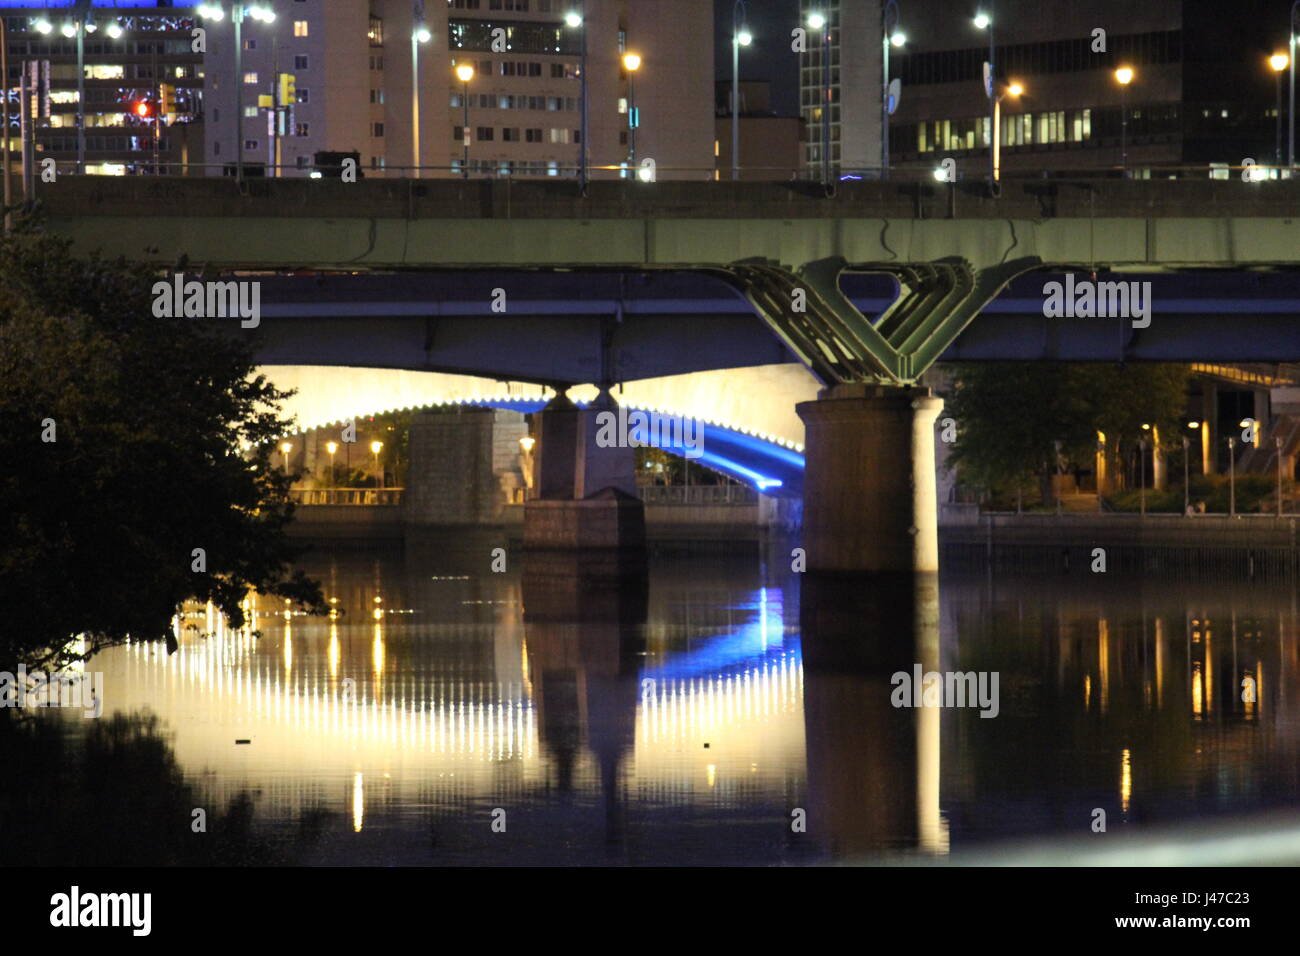 City bridge overlooking river reflection Stock Photo